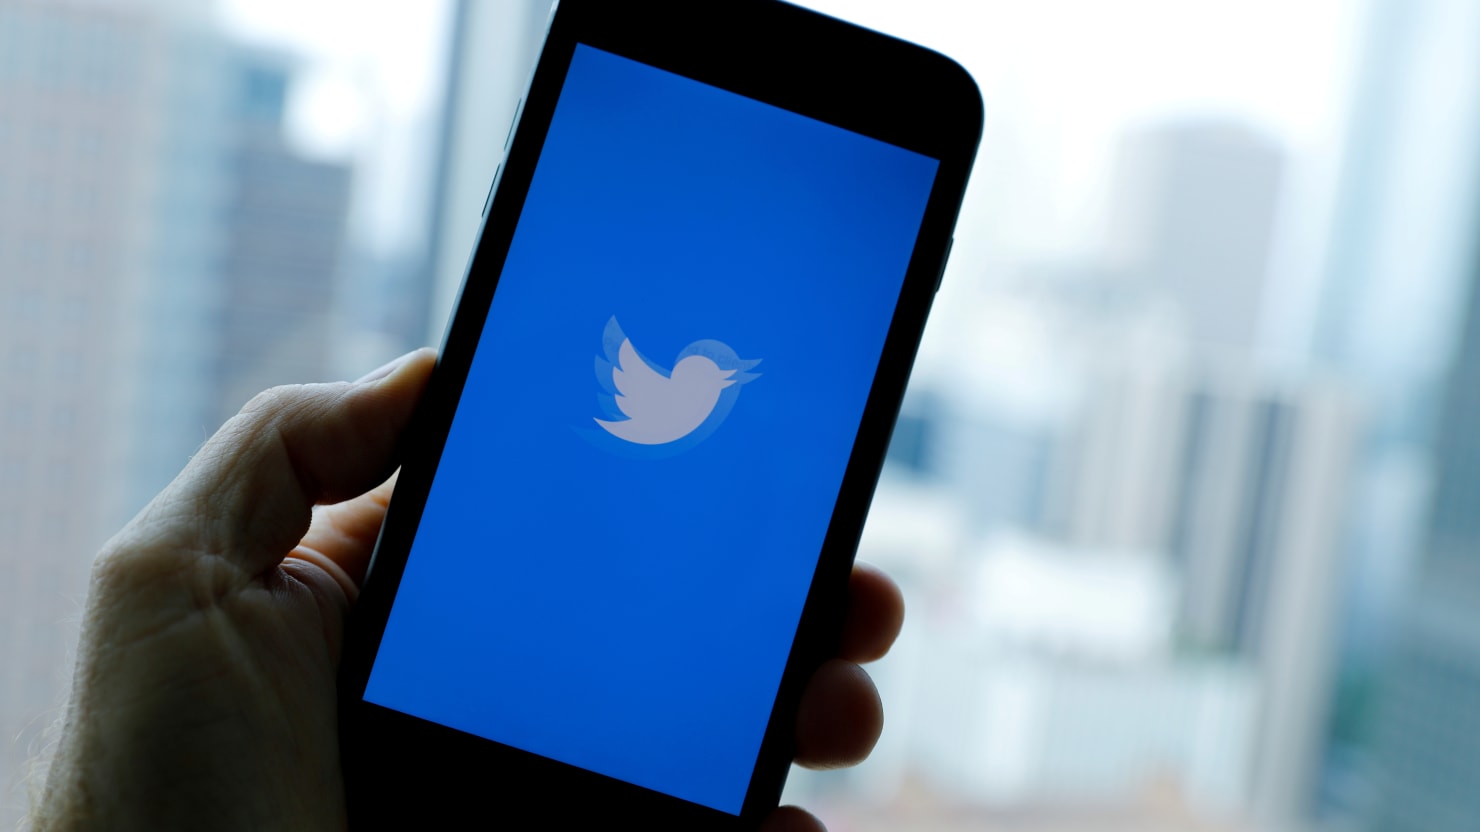 Parliament panel summons Twitter on 18 June over misuse of platform